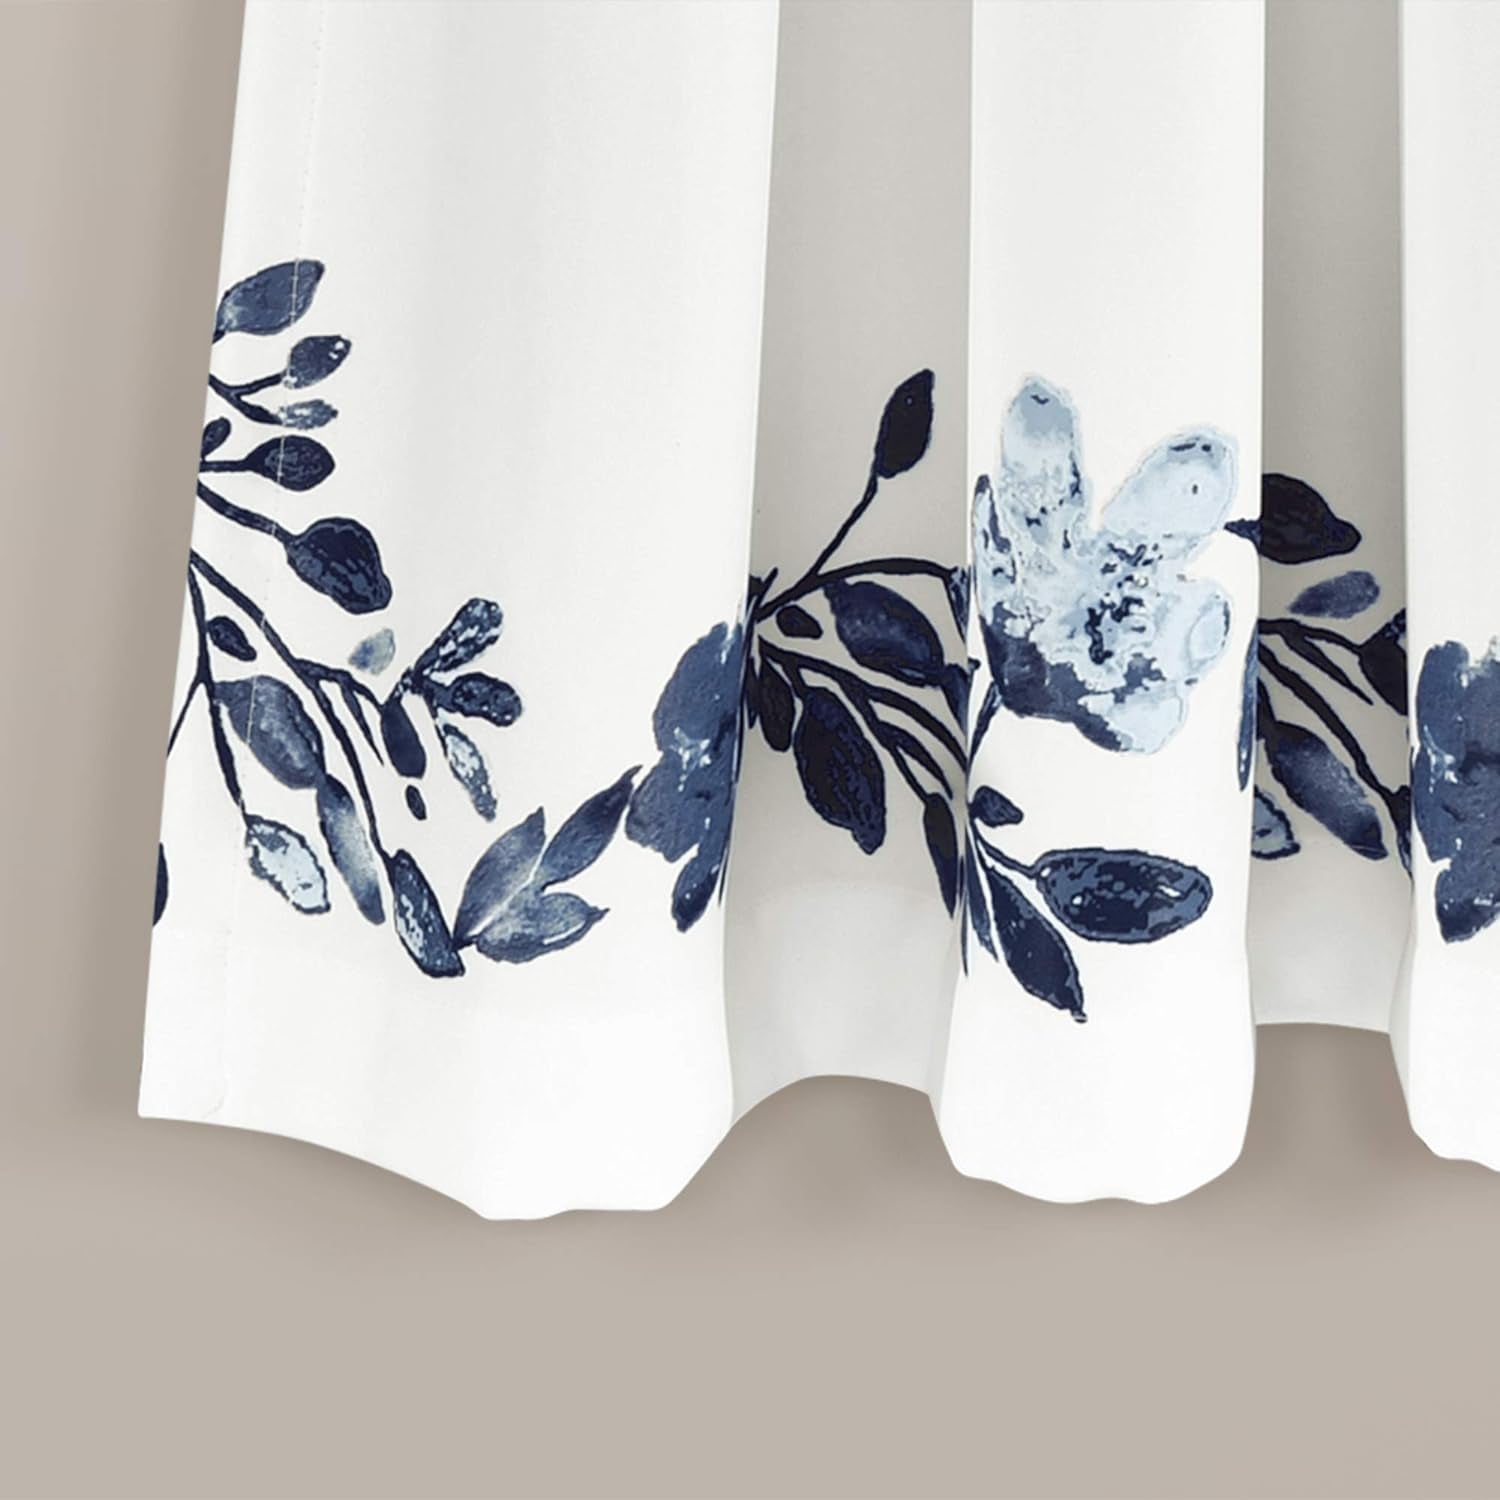 Tanisha Curtains Light Filtering Floral Vine Print Design Window Panel Set (Pair), 52"W X 63"L, Navy & White